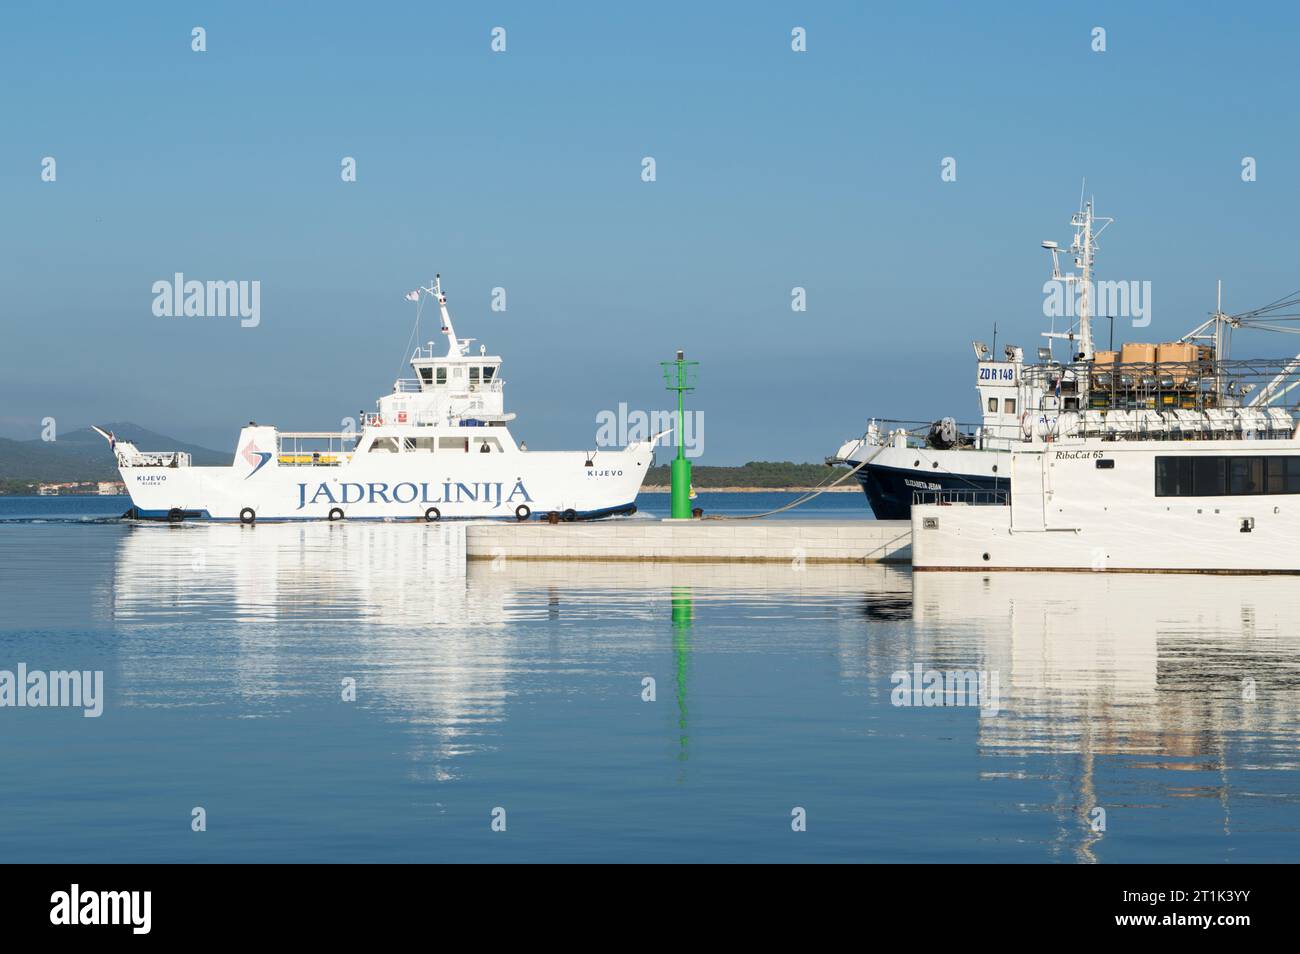 Biograd, Croatia - 10 Oct 2020: Passenger and car ferry ship arriving in Biograd, owned by Jadrolinija, Croatian shipping company Stock Photo